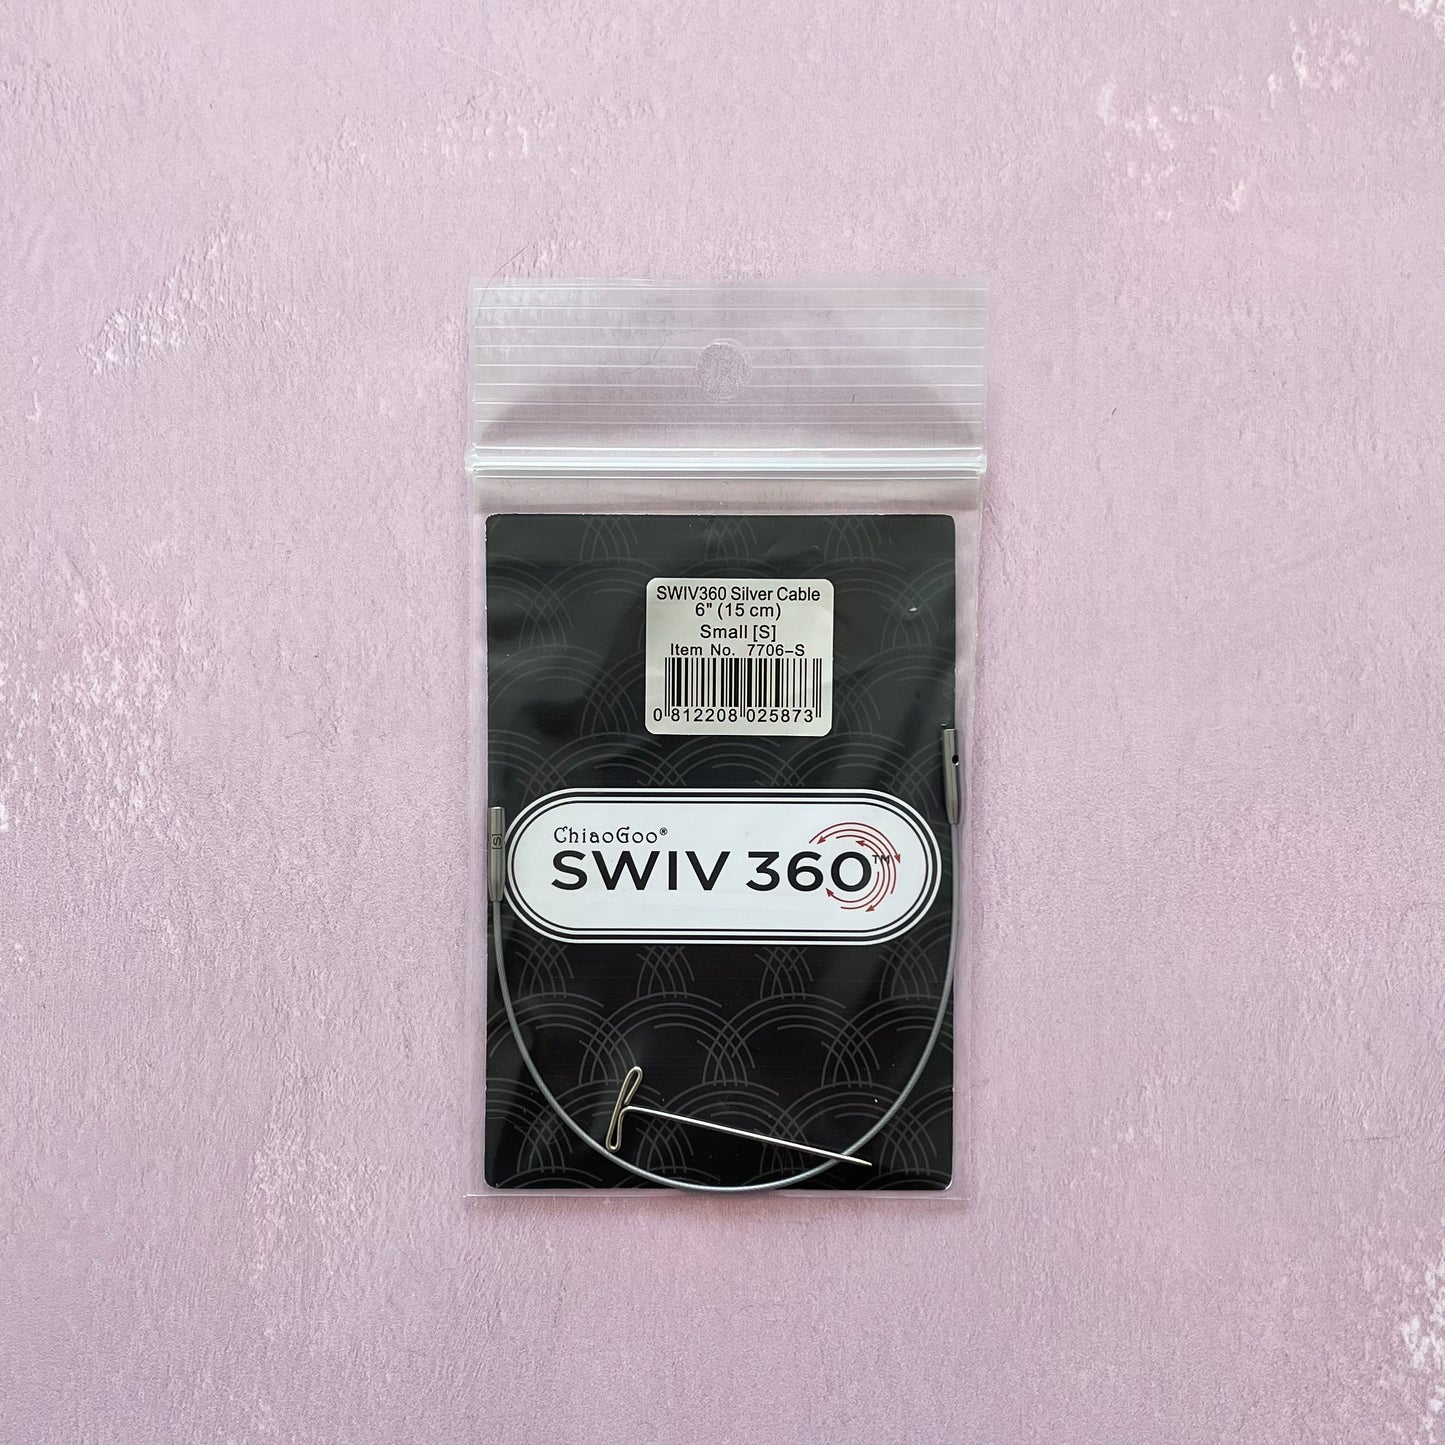 Cable para palillos intercambiables SWIV360 Silver 15cm - Para palillos de 8cm o menos